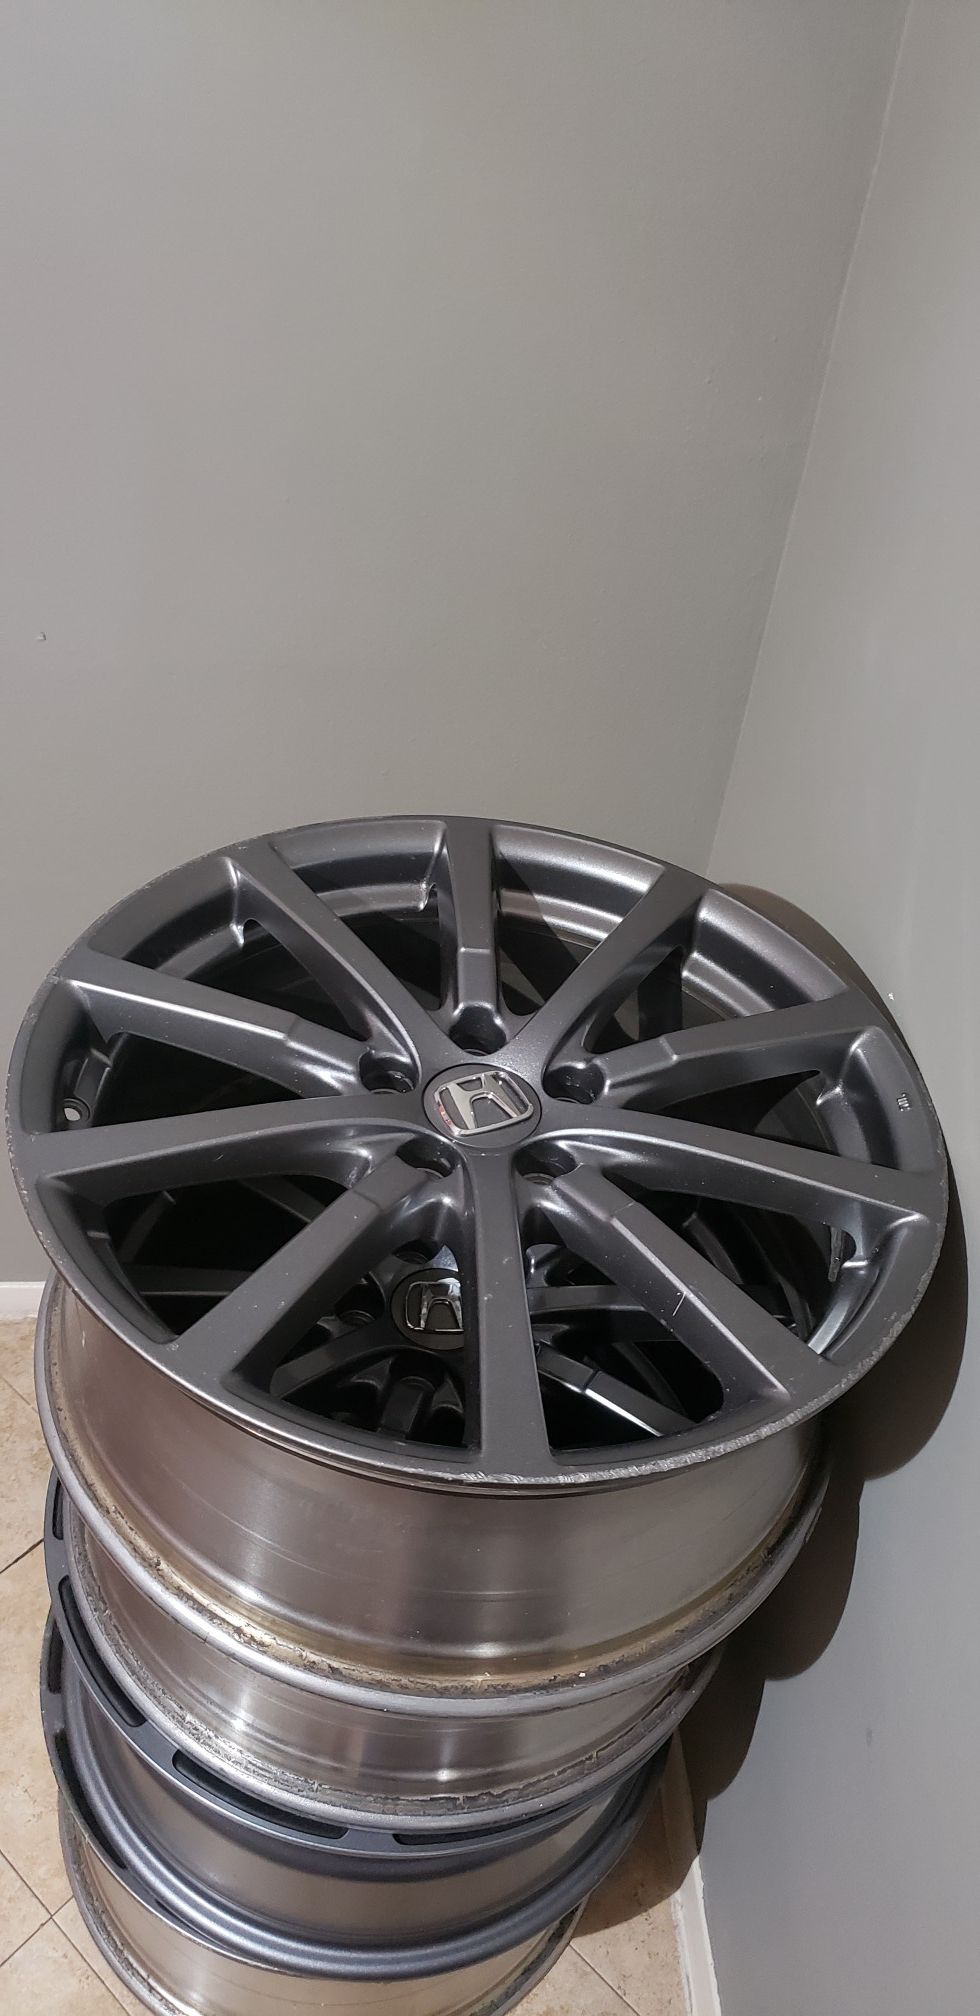 hfp 19 inch wheels